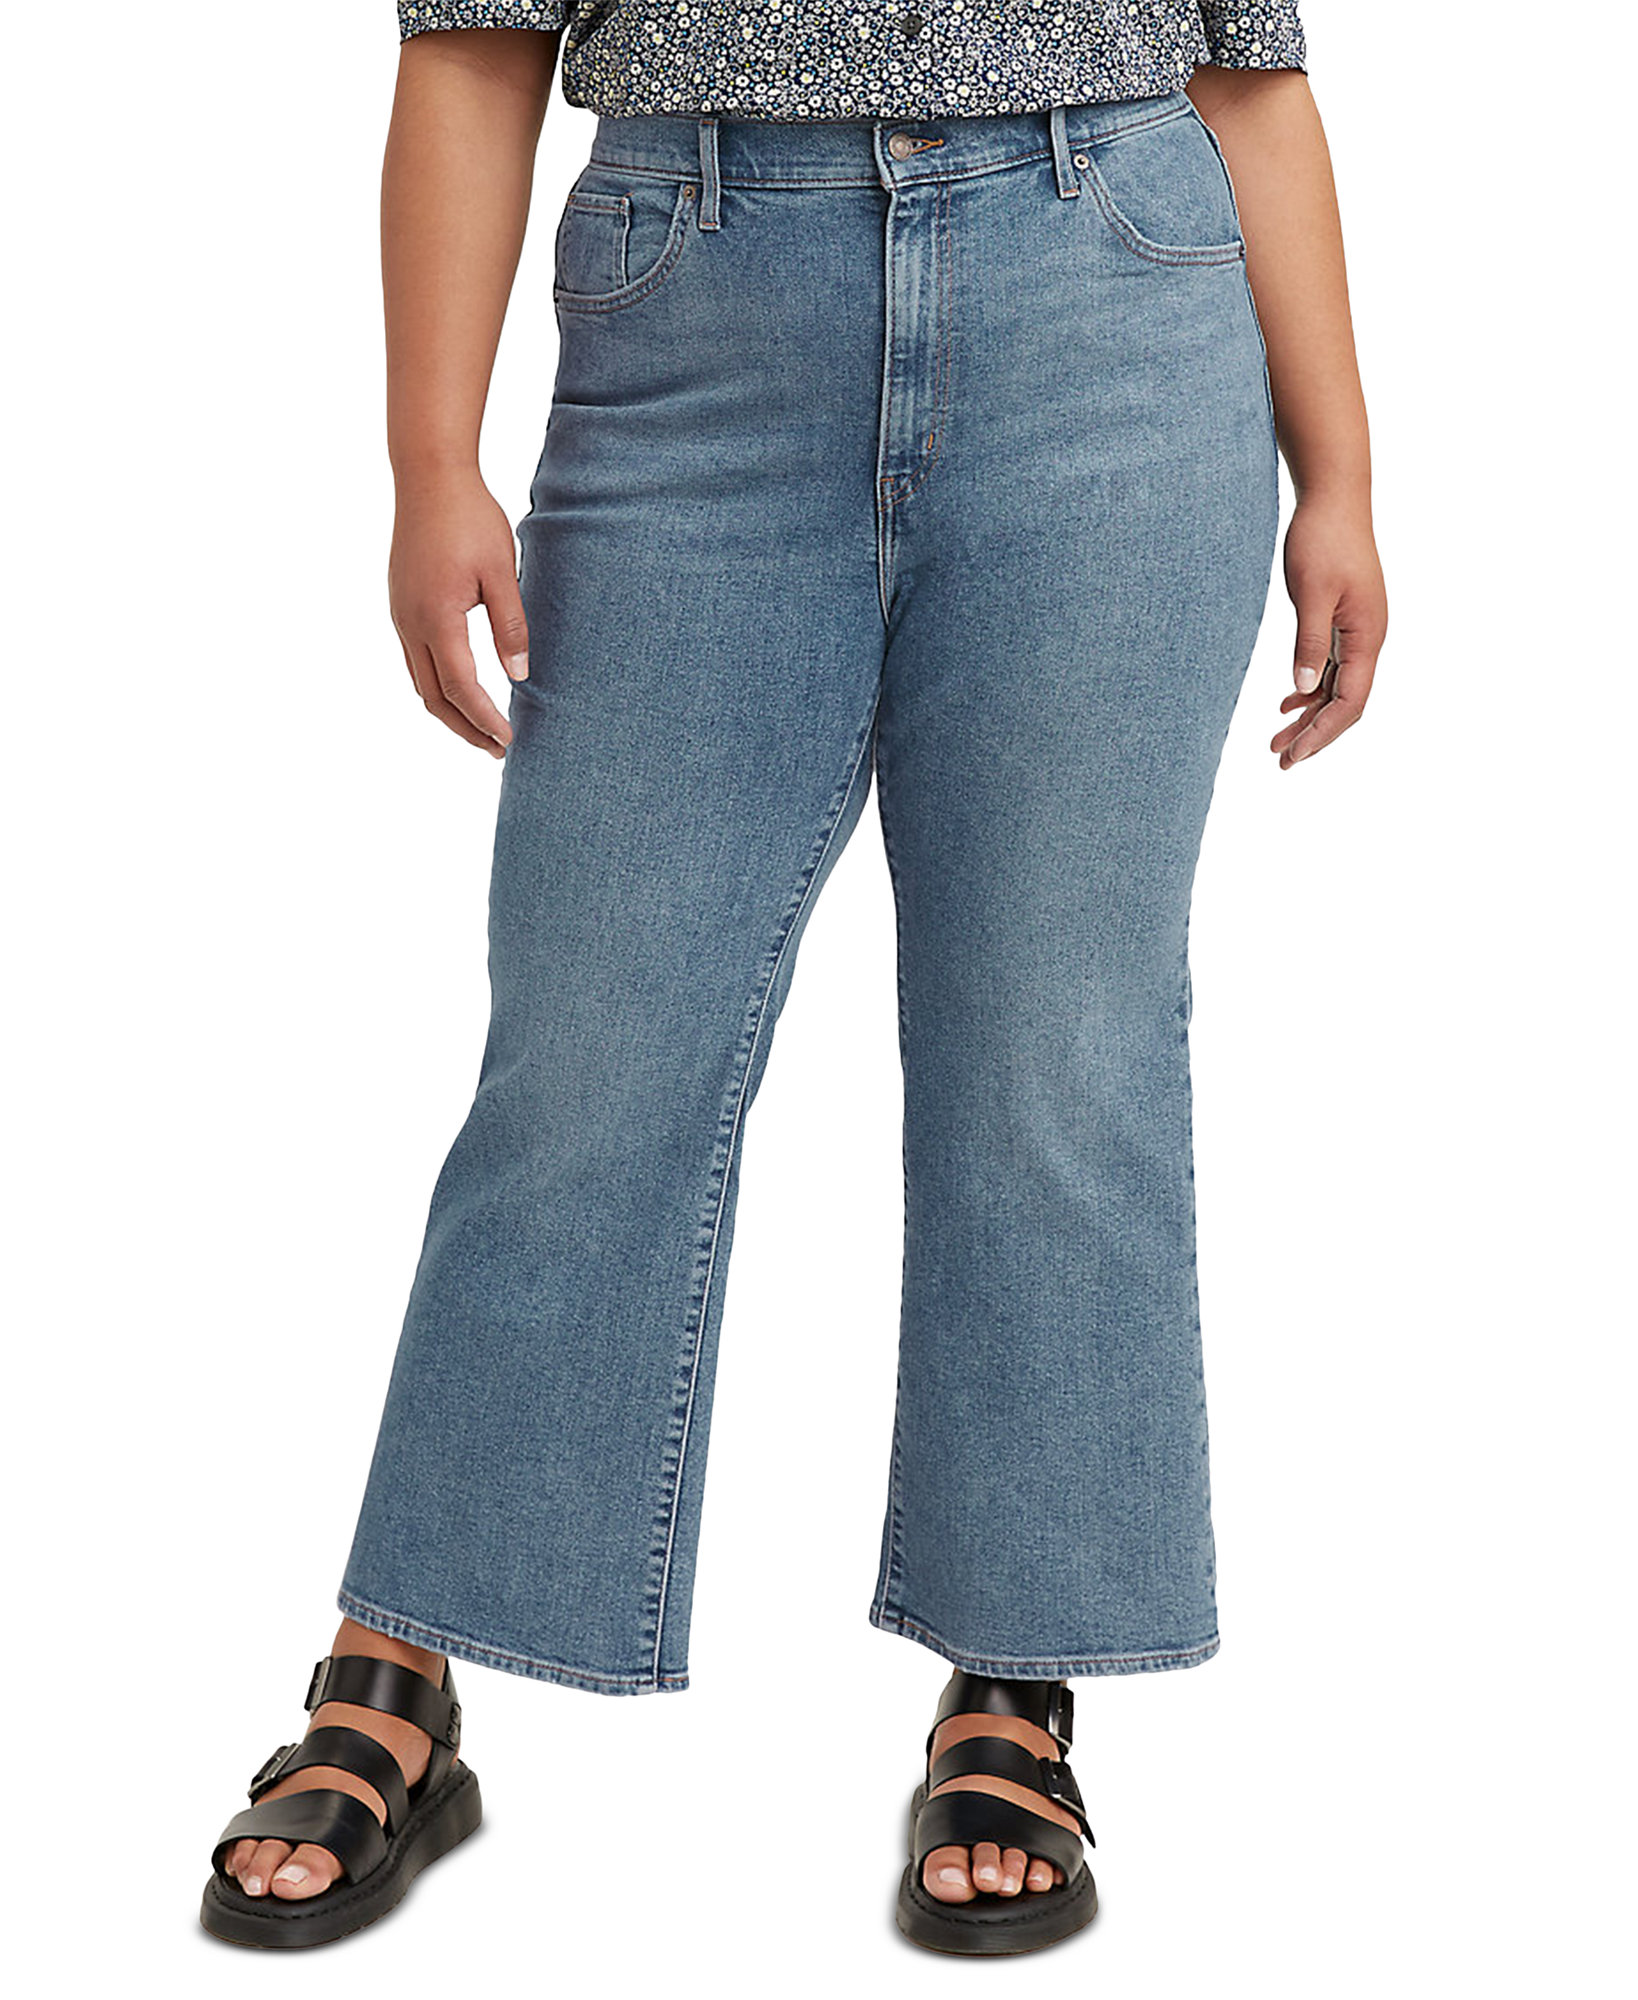 Levi's Women's Plus Size Flare-Leg Jeans (16W, Nip At The Bud Plus)  195339942777 | eBay